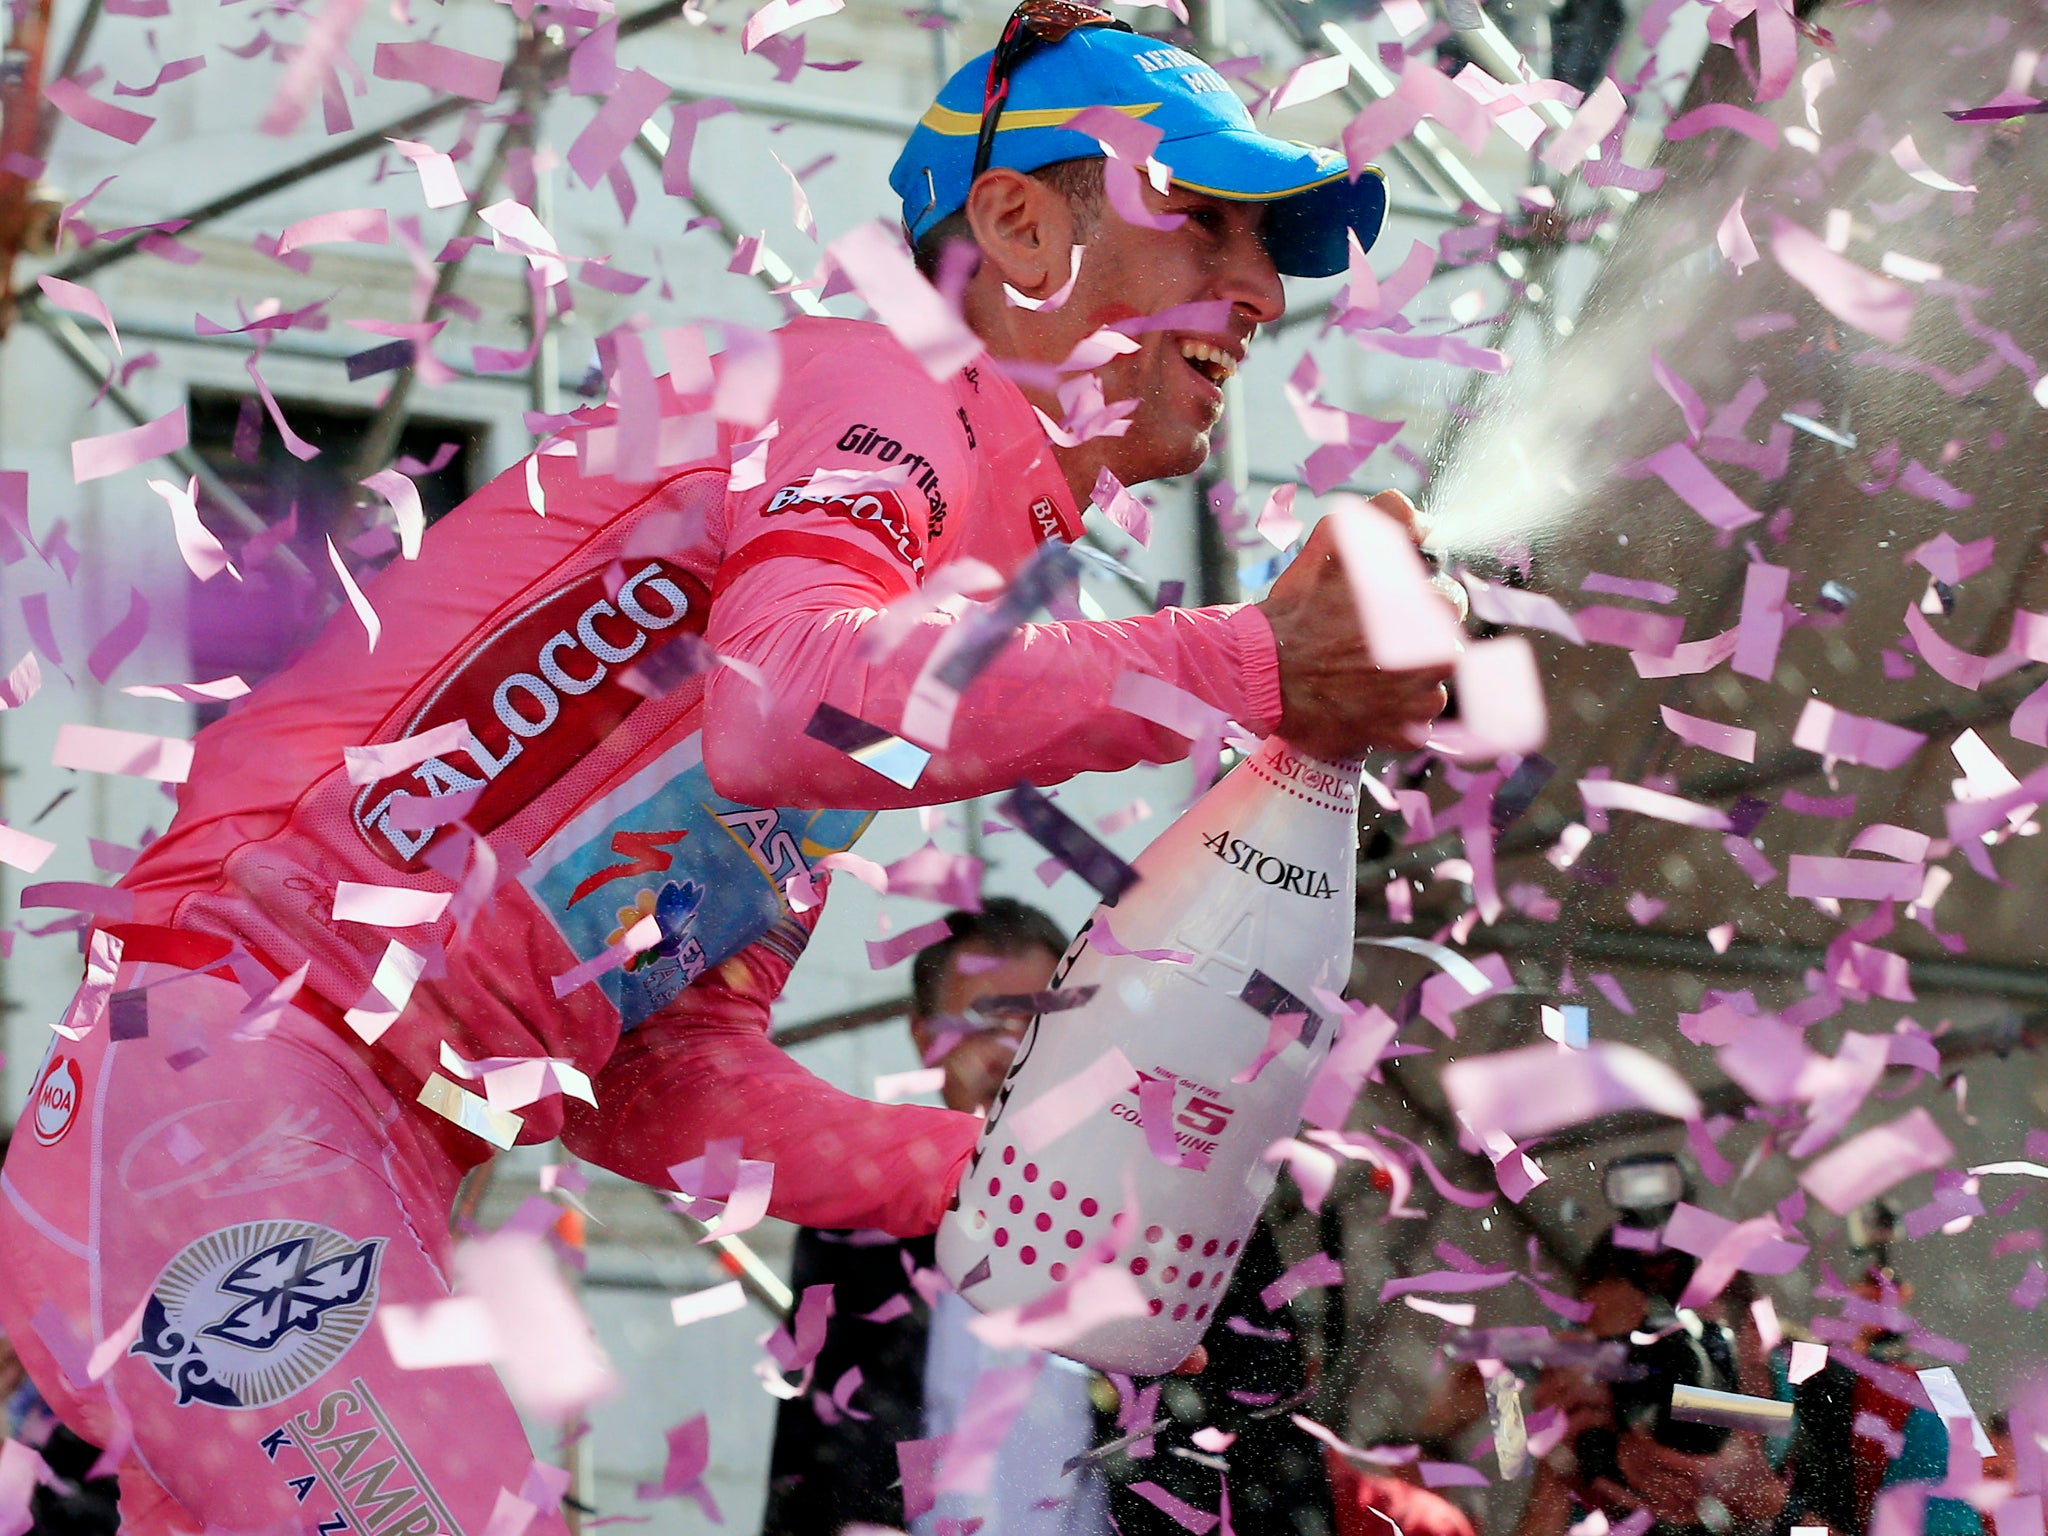 Vincenzo Nibali celebrating his Giro win in the pink jersey in 2016